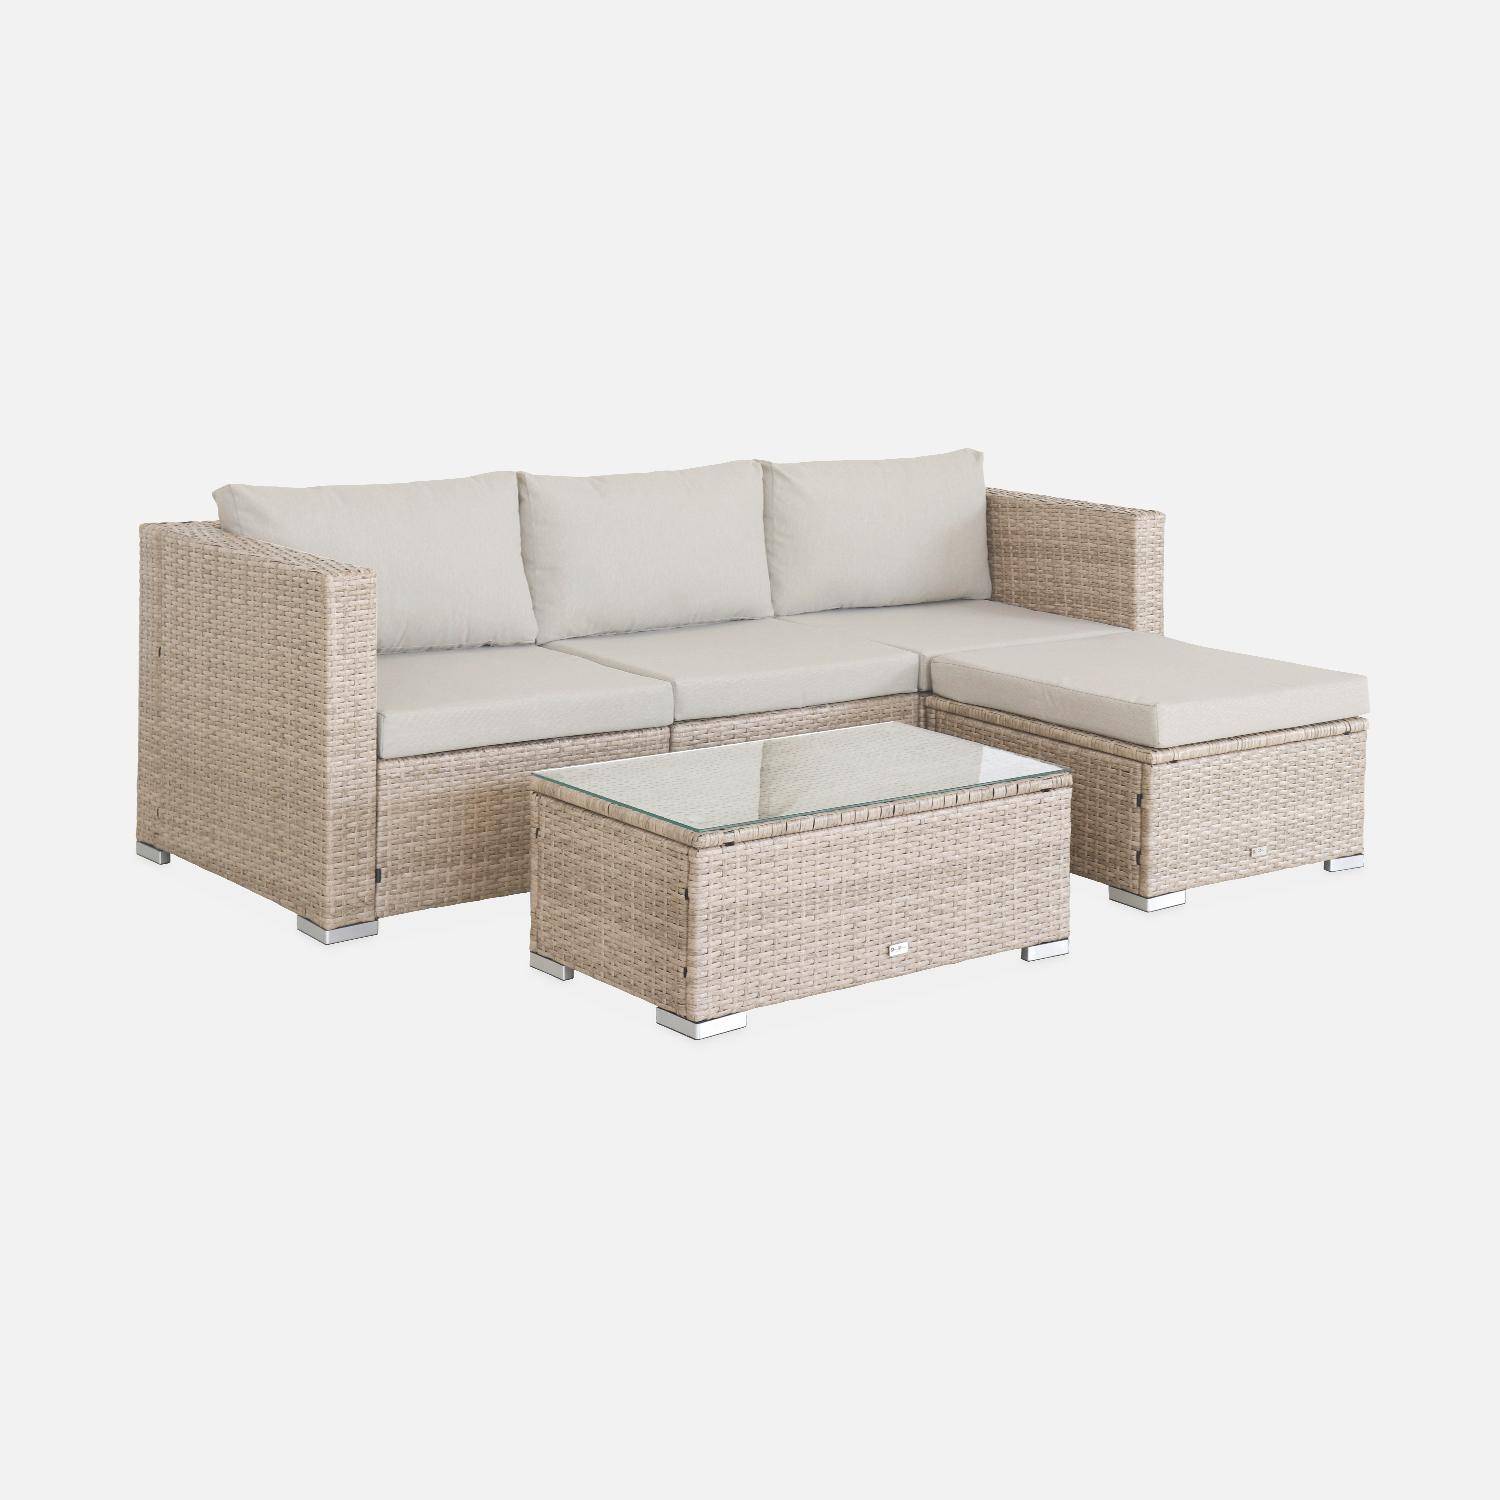 4-seater rattan garden sofa set - sofa, footrest, coffee table - Torino - Beige Photo3